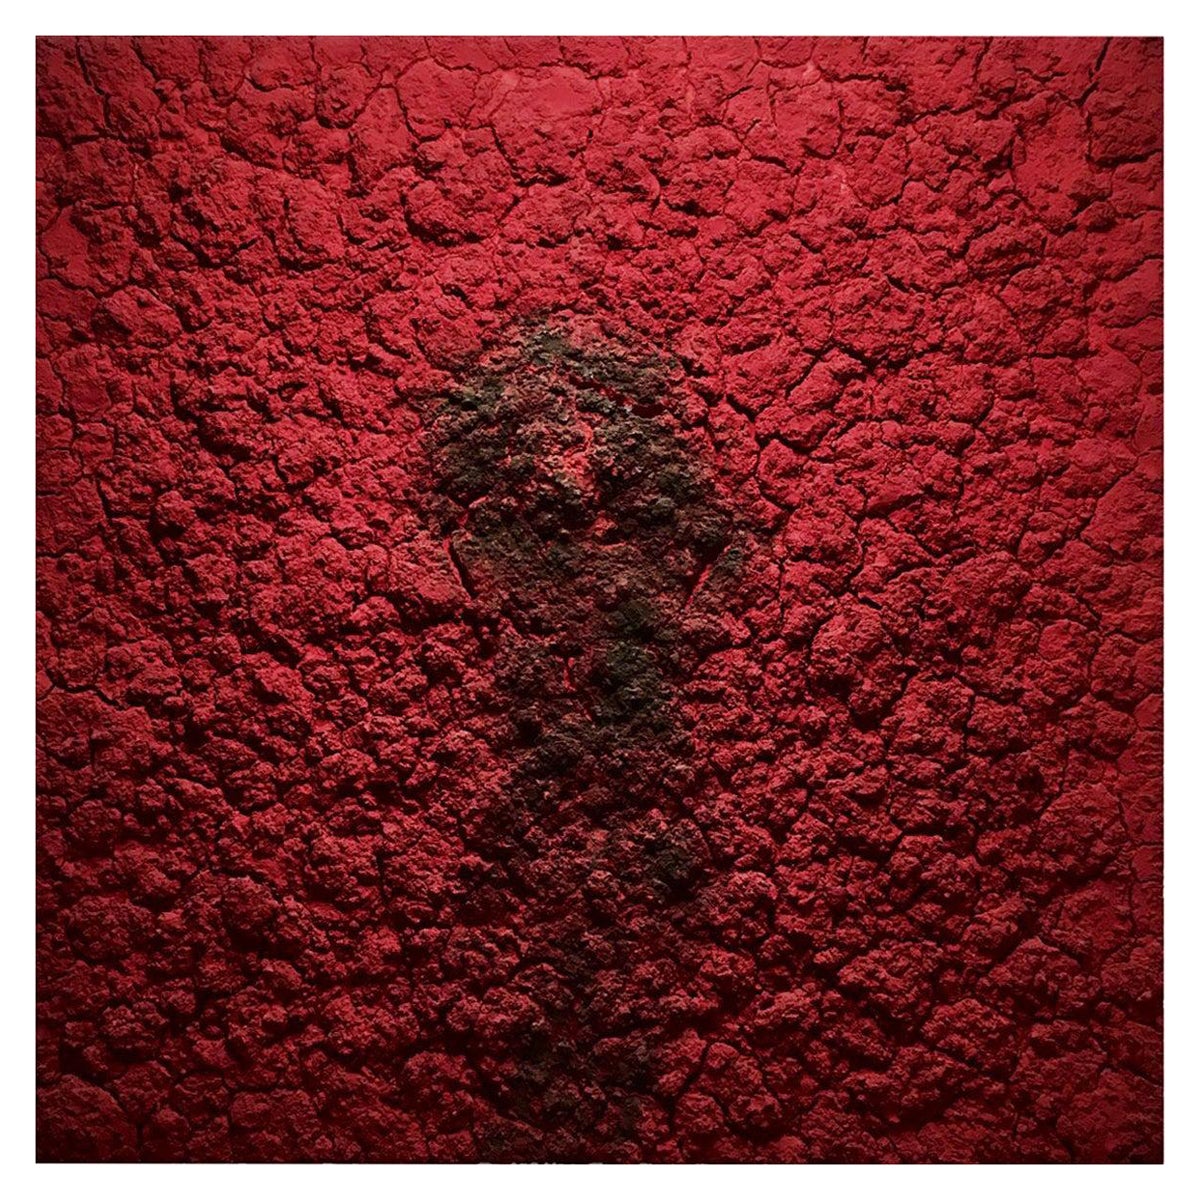 Bosco Sodi Contemporary Mixed-Media on Canvas Red Artwork, 2012 For Sale